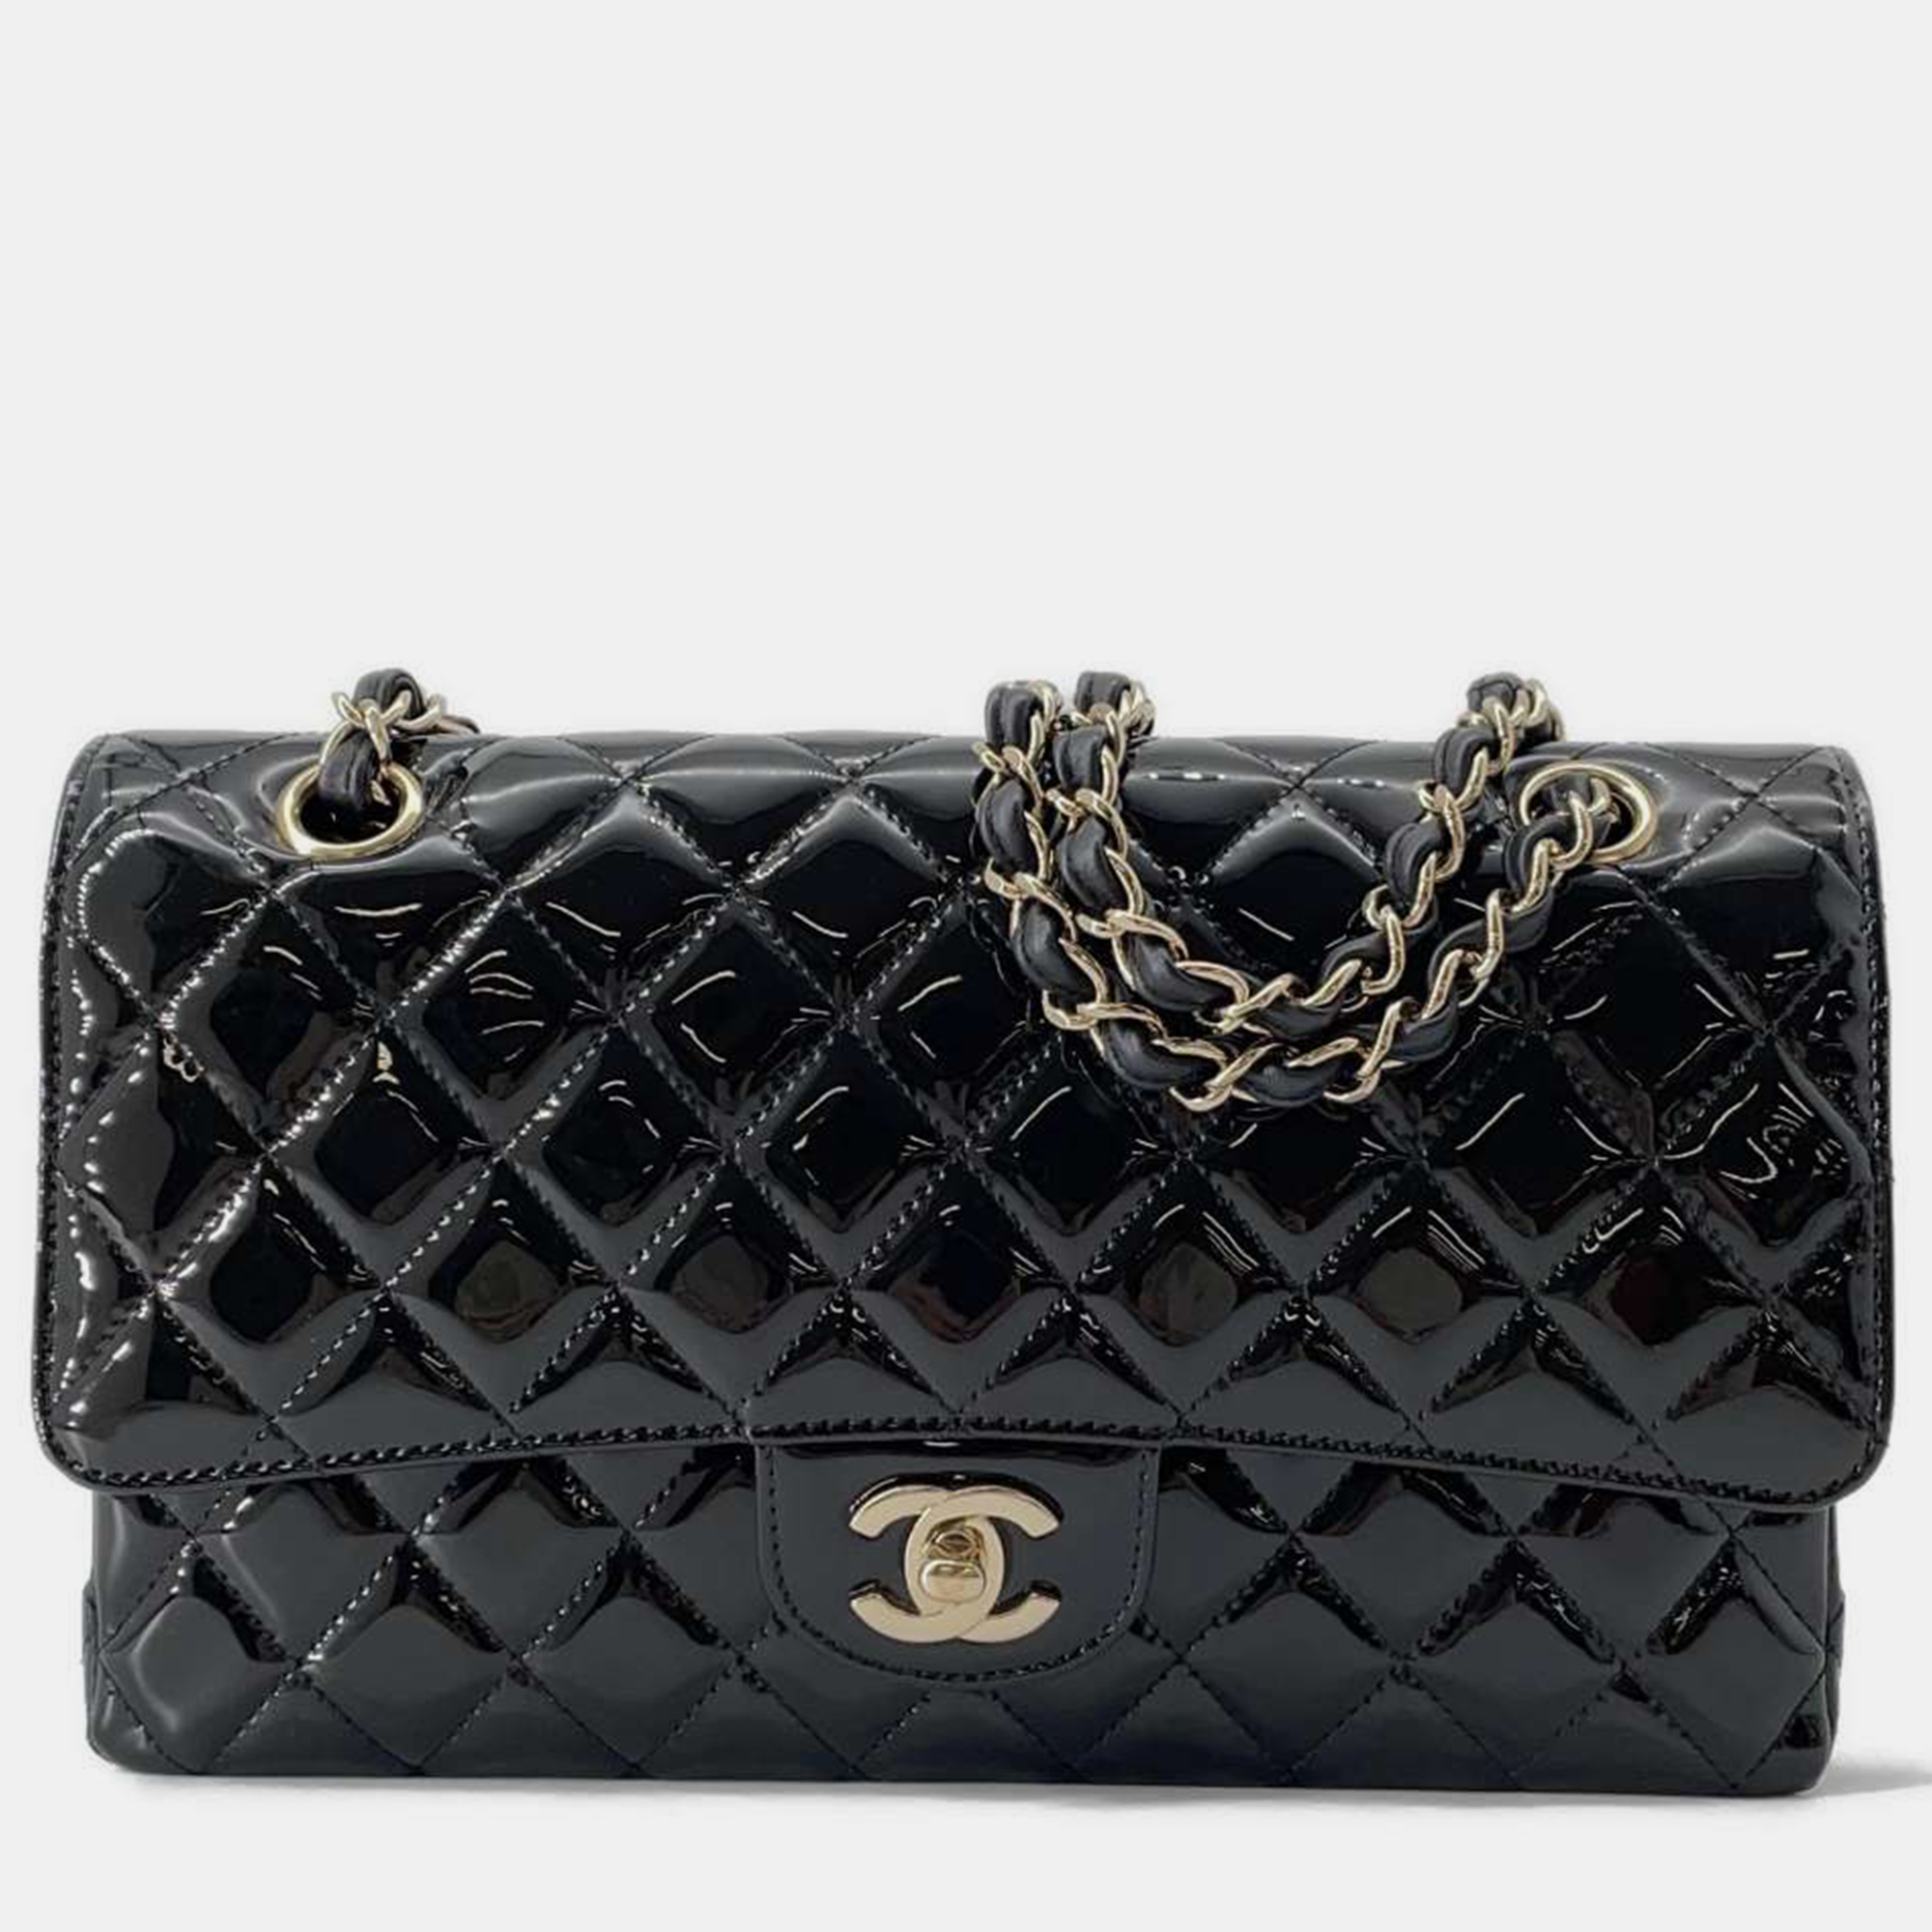 Chanel black patent leather classic double flap bag